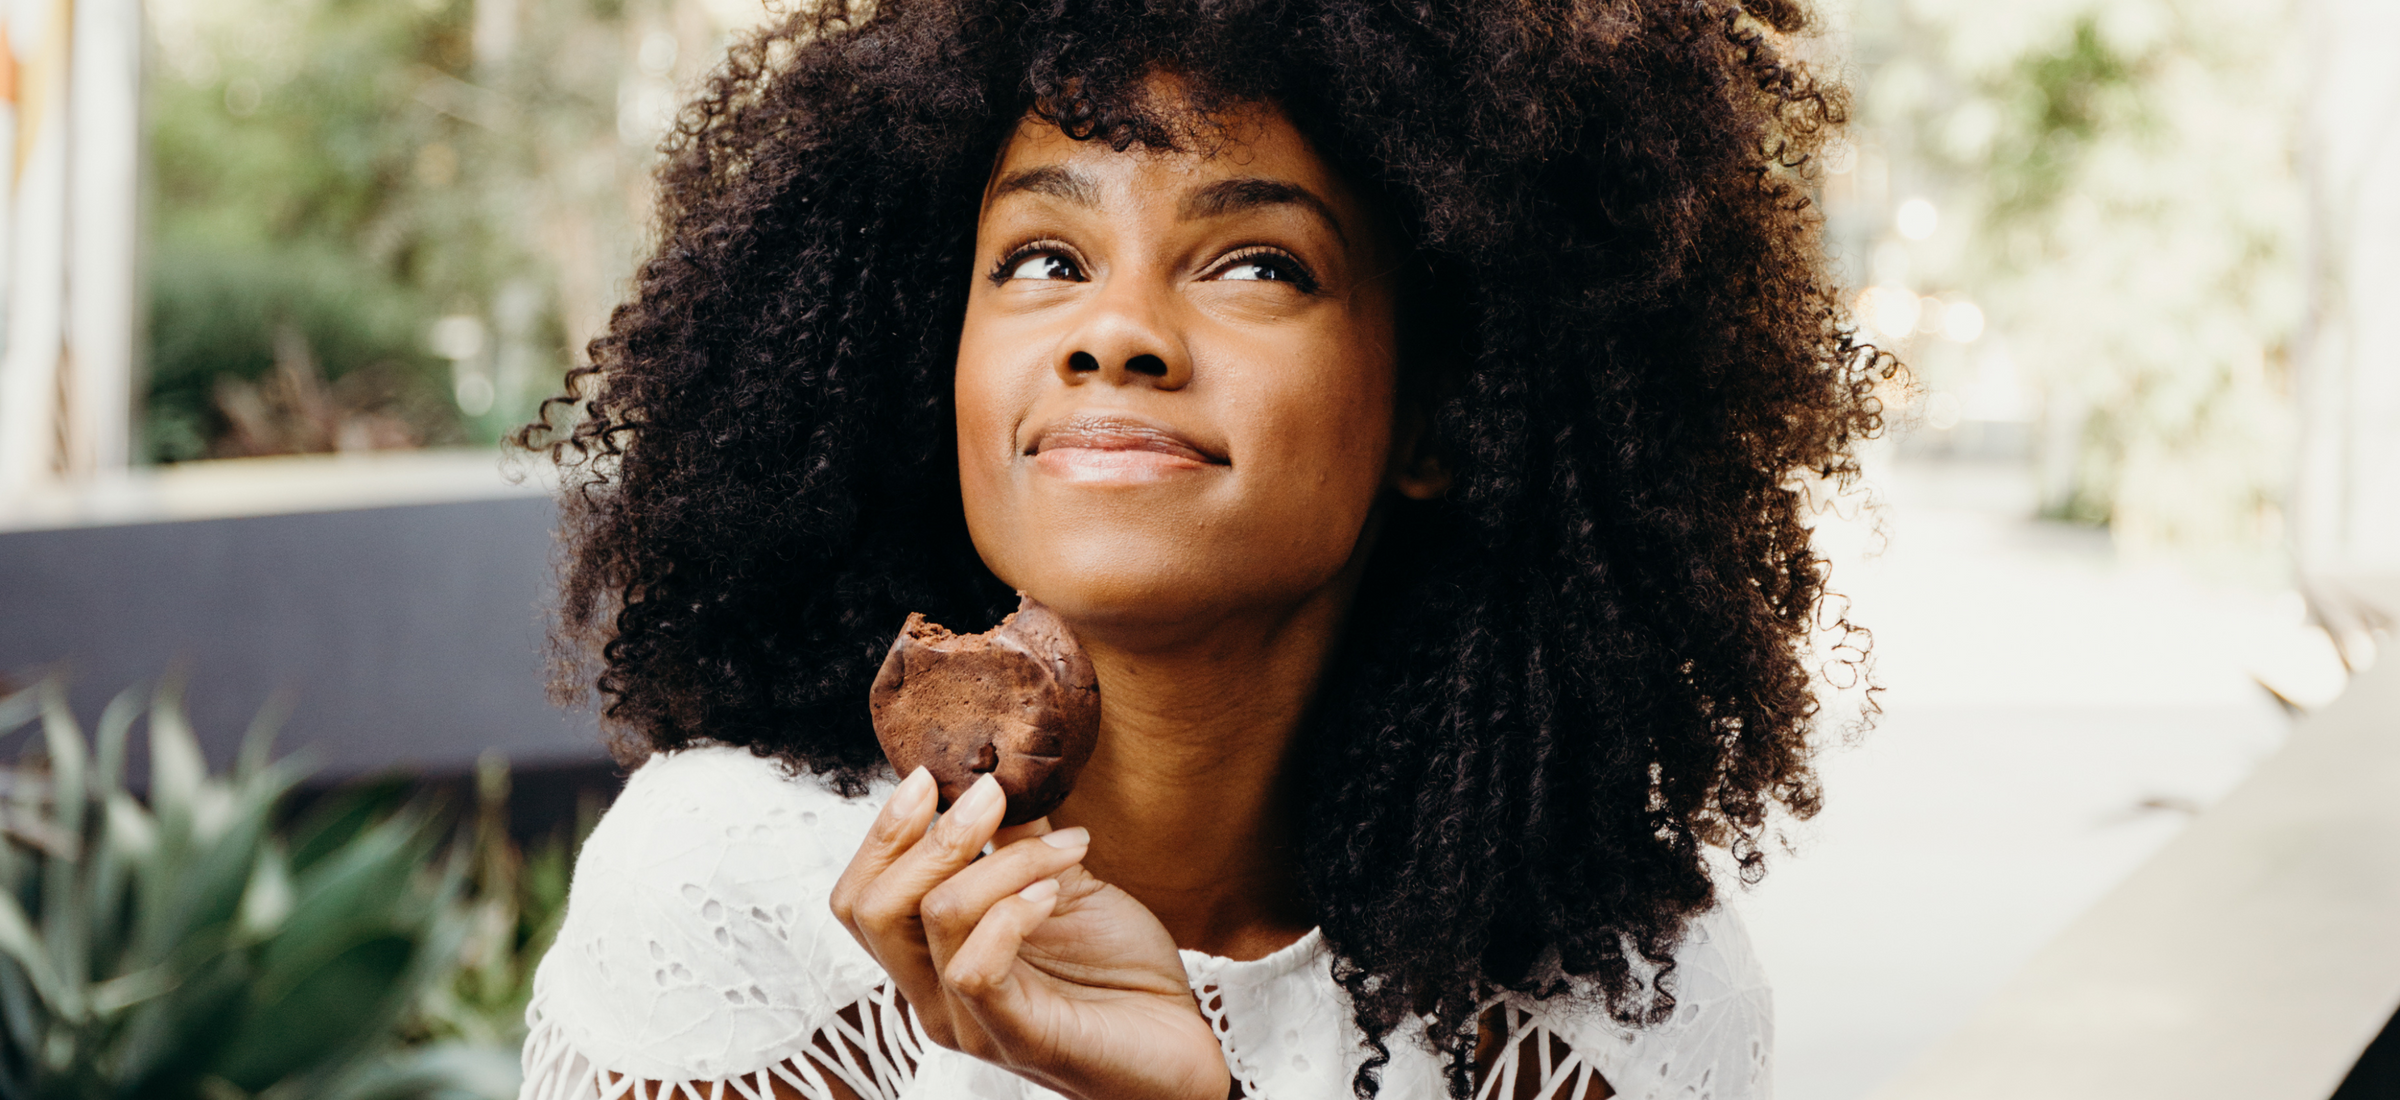 Woman enjoying Rule Breaker Snacks vegan gluten free allergen free Brownies